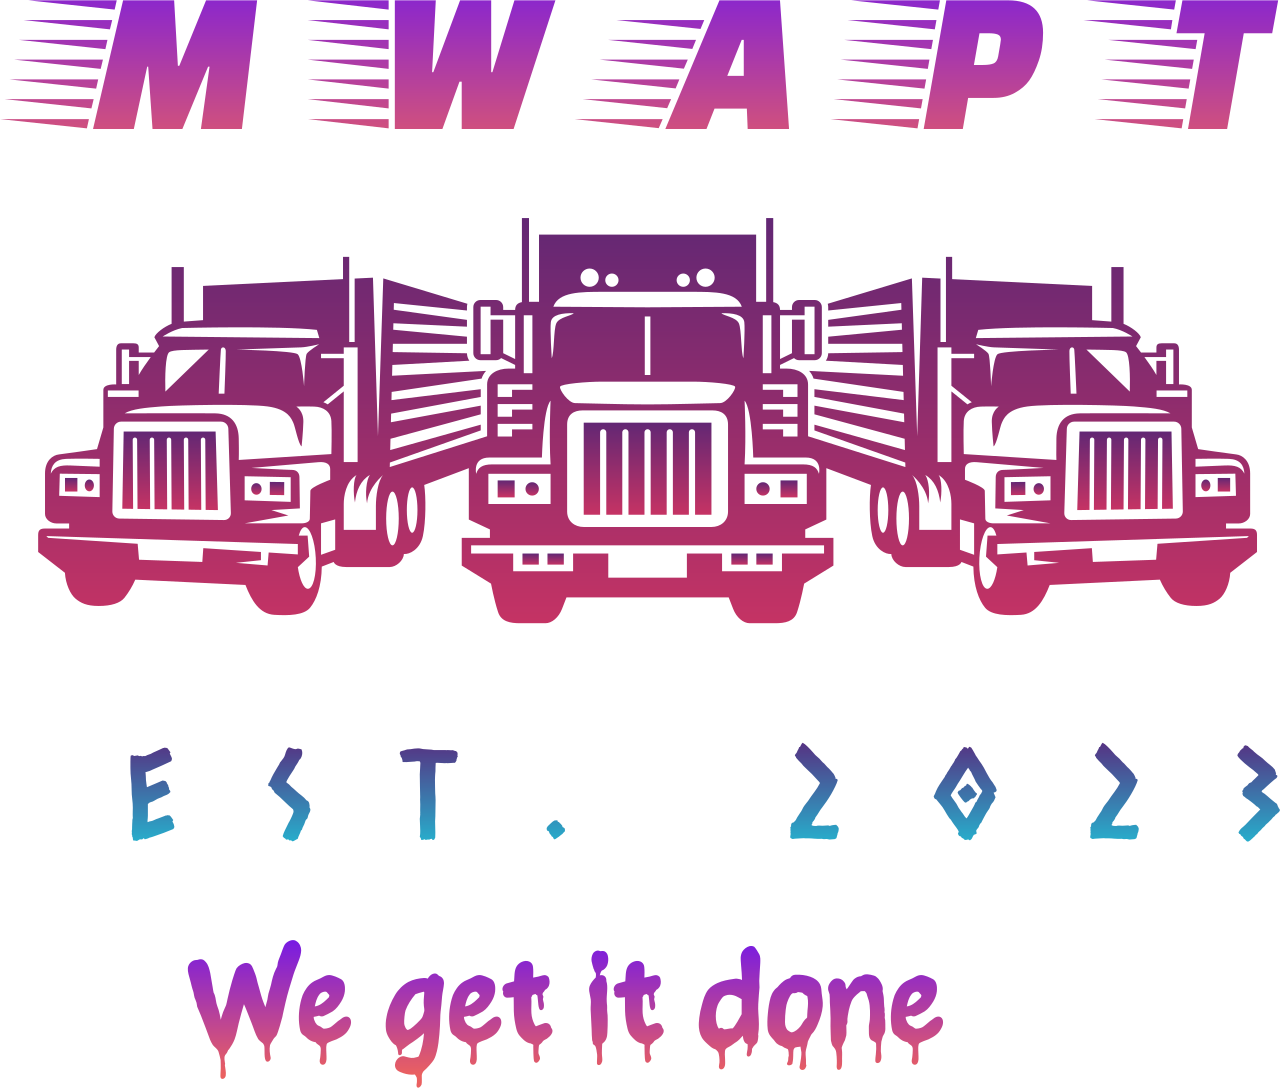 MWAPT's logo